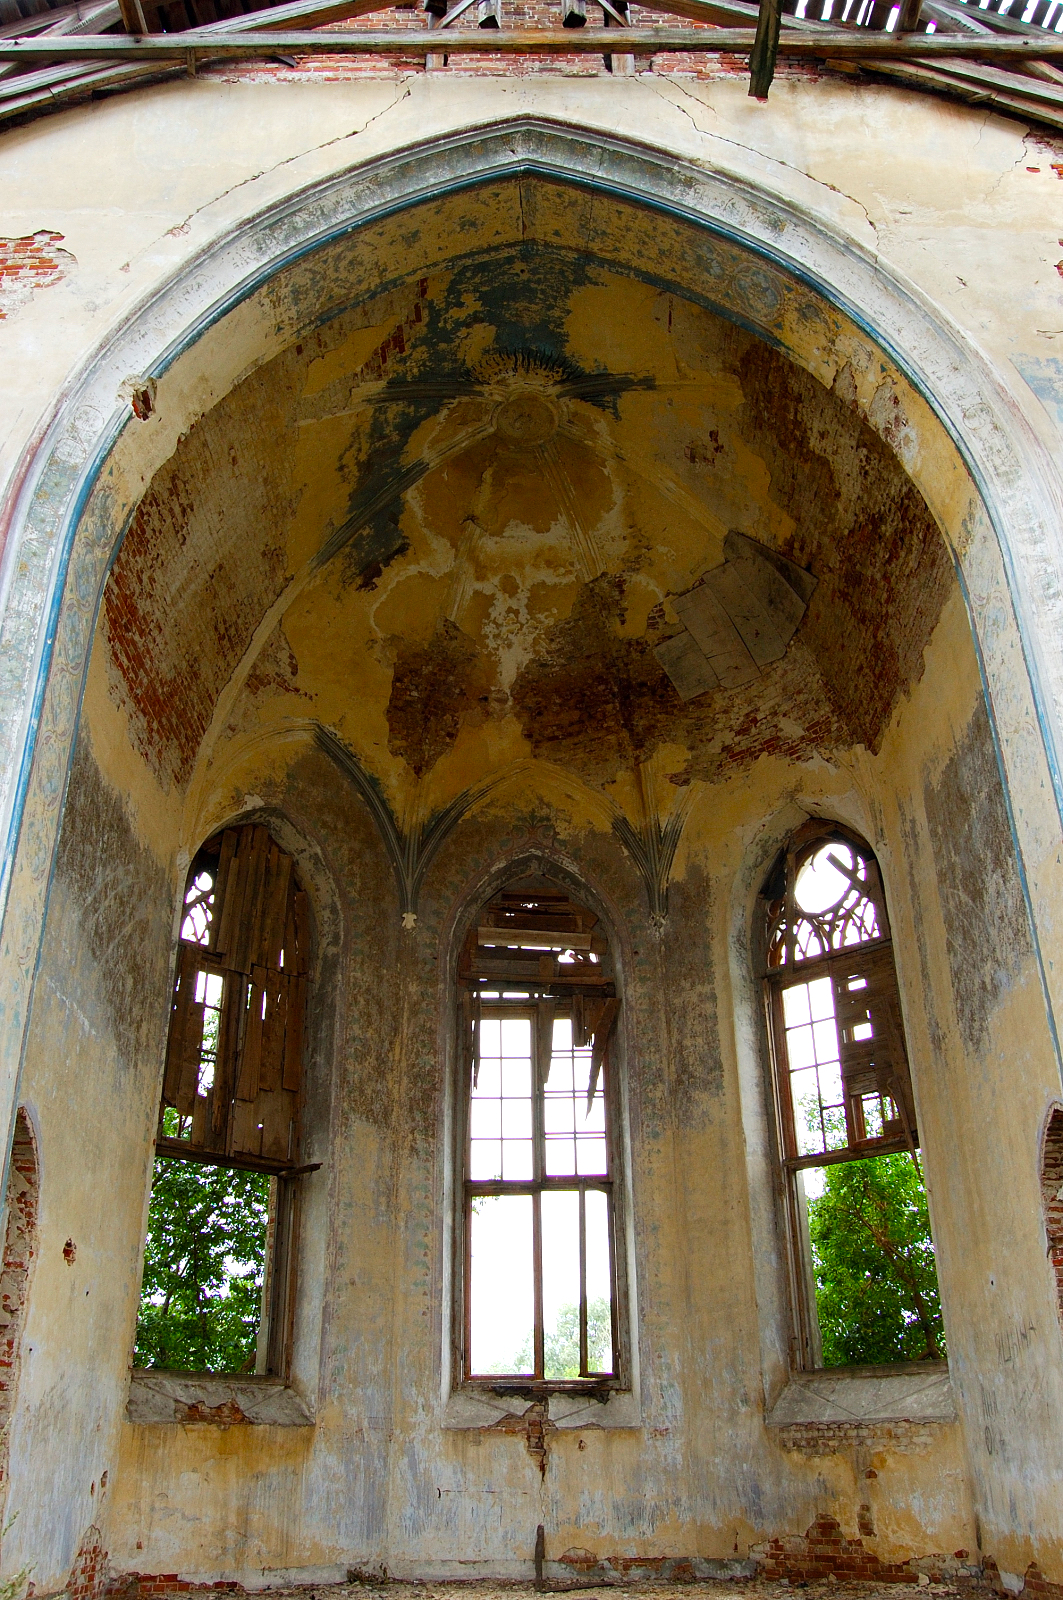 Interior of the church in Kamenka. Source: Steve Schreiber (2006).